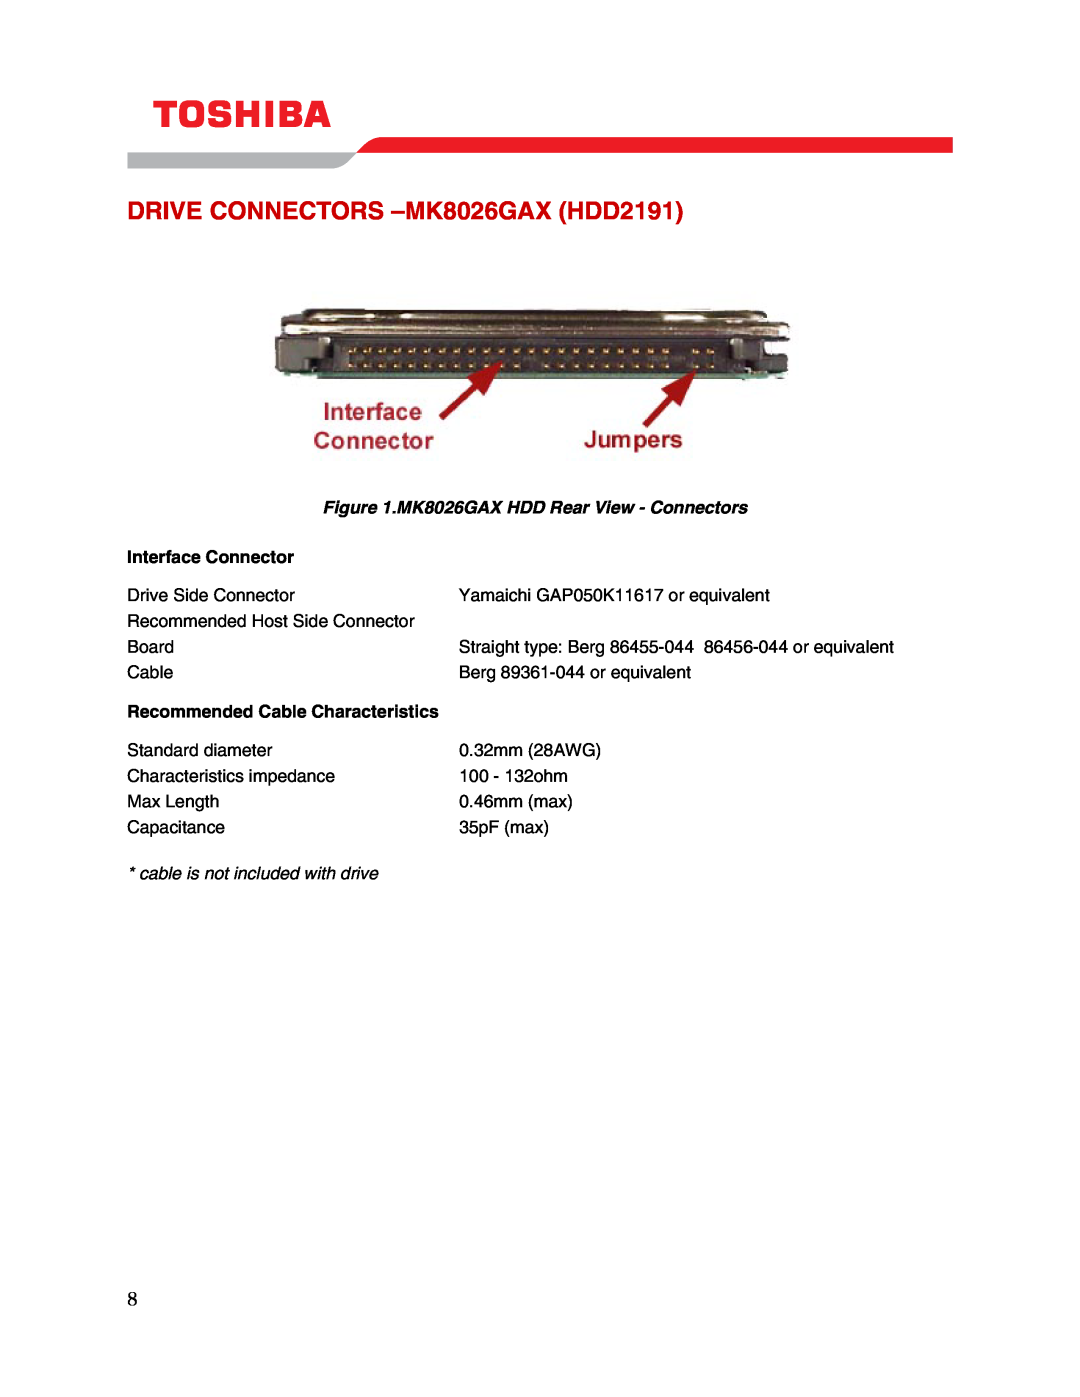 Toshiba user manual DRIVE CONNECTORS -MK8026GAX HDD2191, MK8026GAX HDD Rear View - Connectors, Interface Connector 